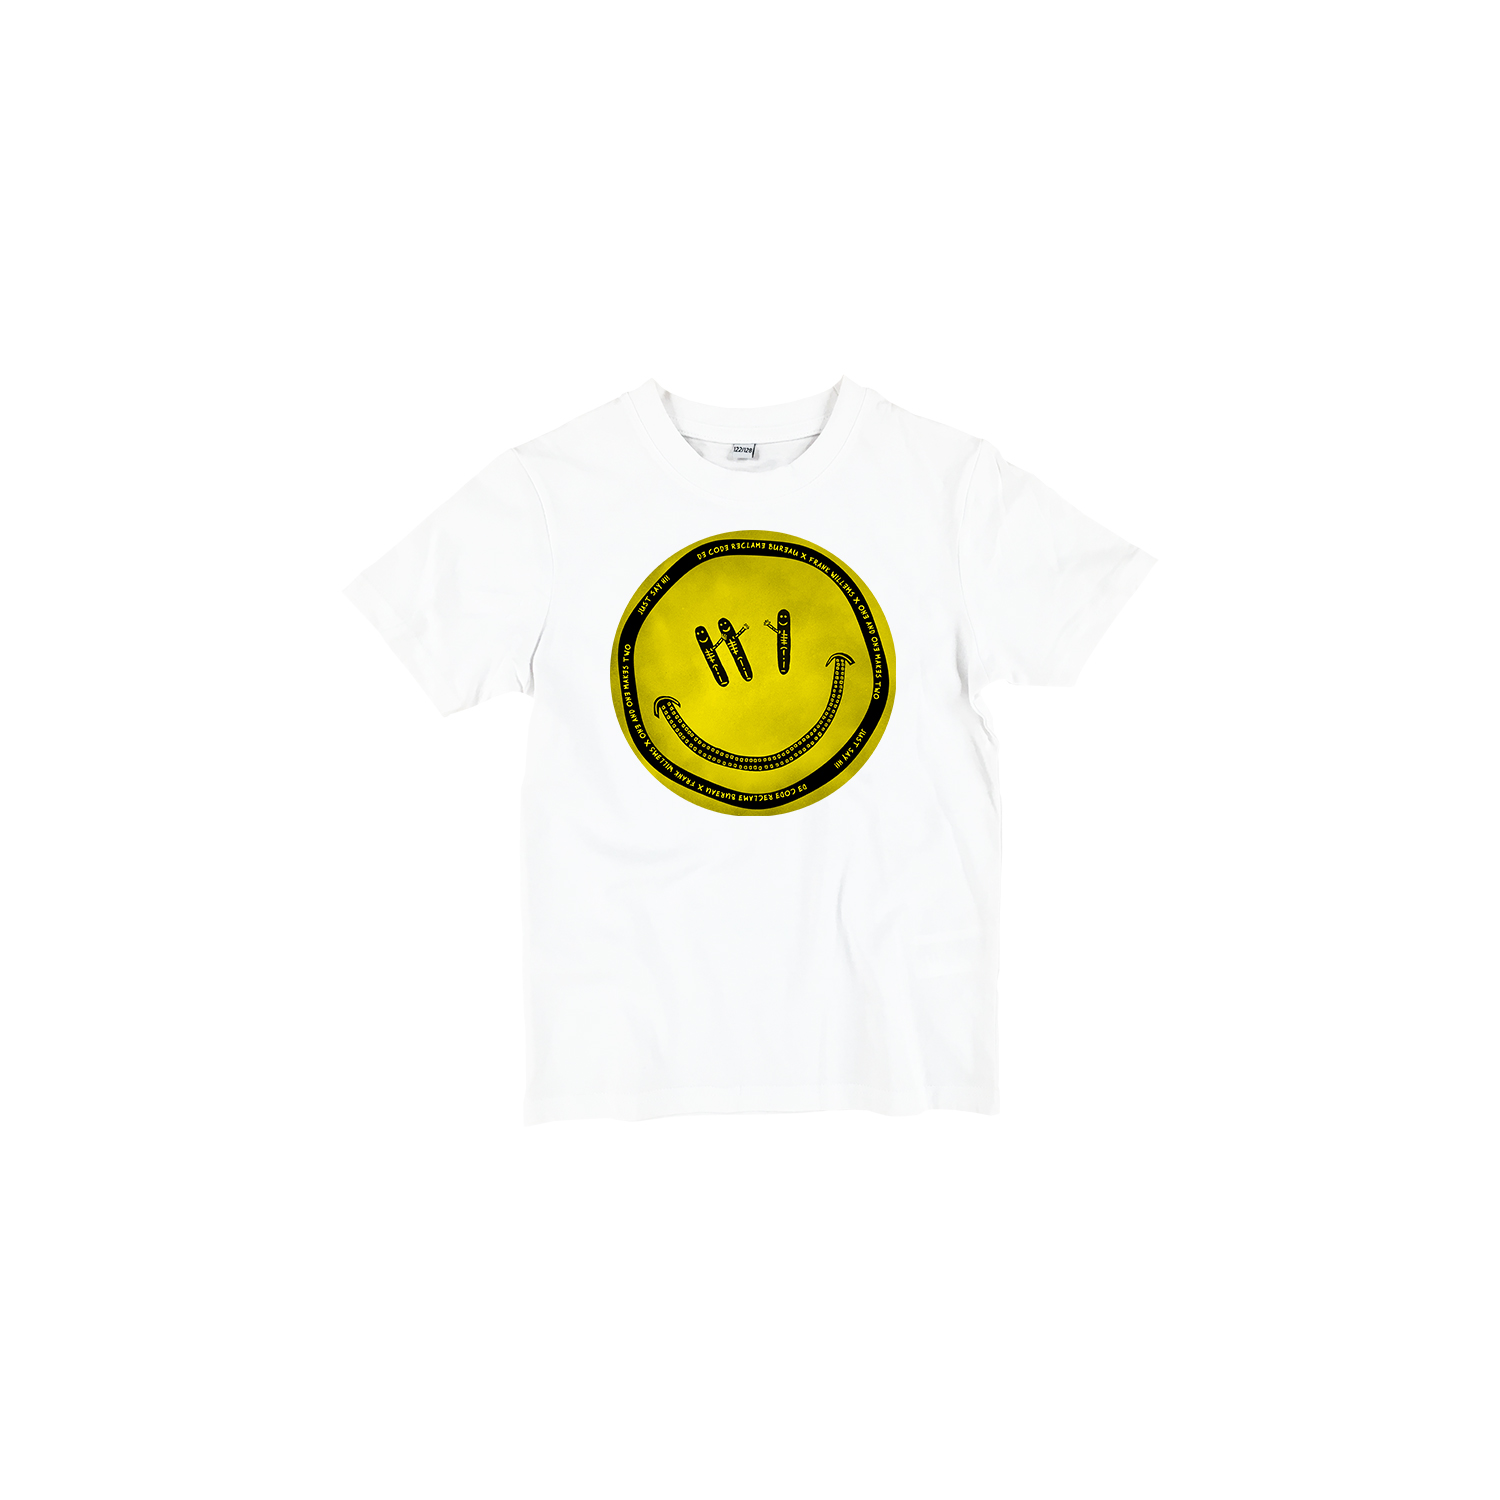 Kids T-shirt - JUST SAY HI! by De Code Reclamebureau x Frank Willems – wit